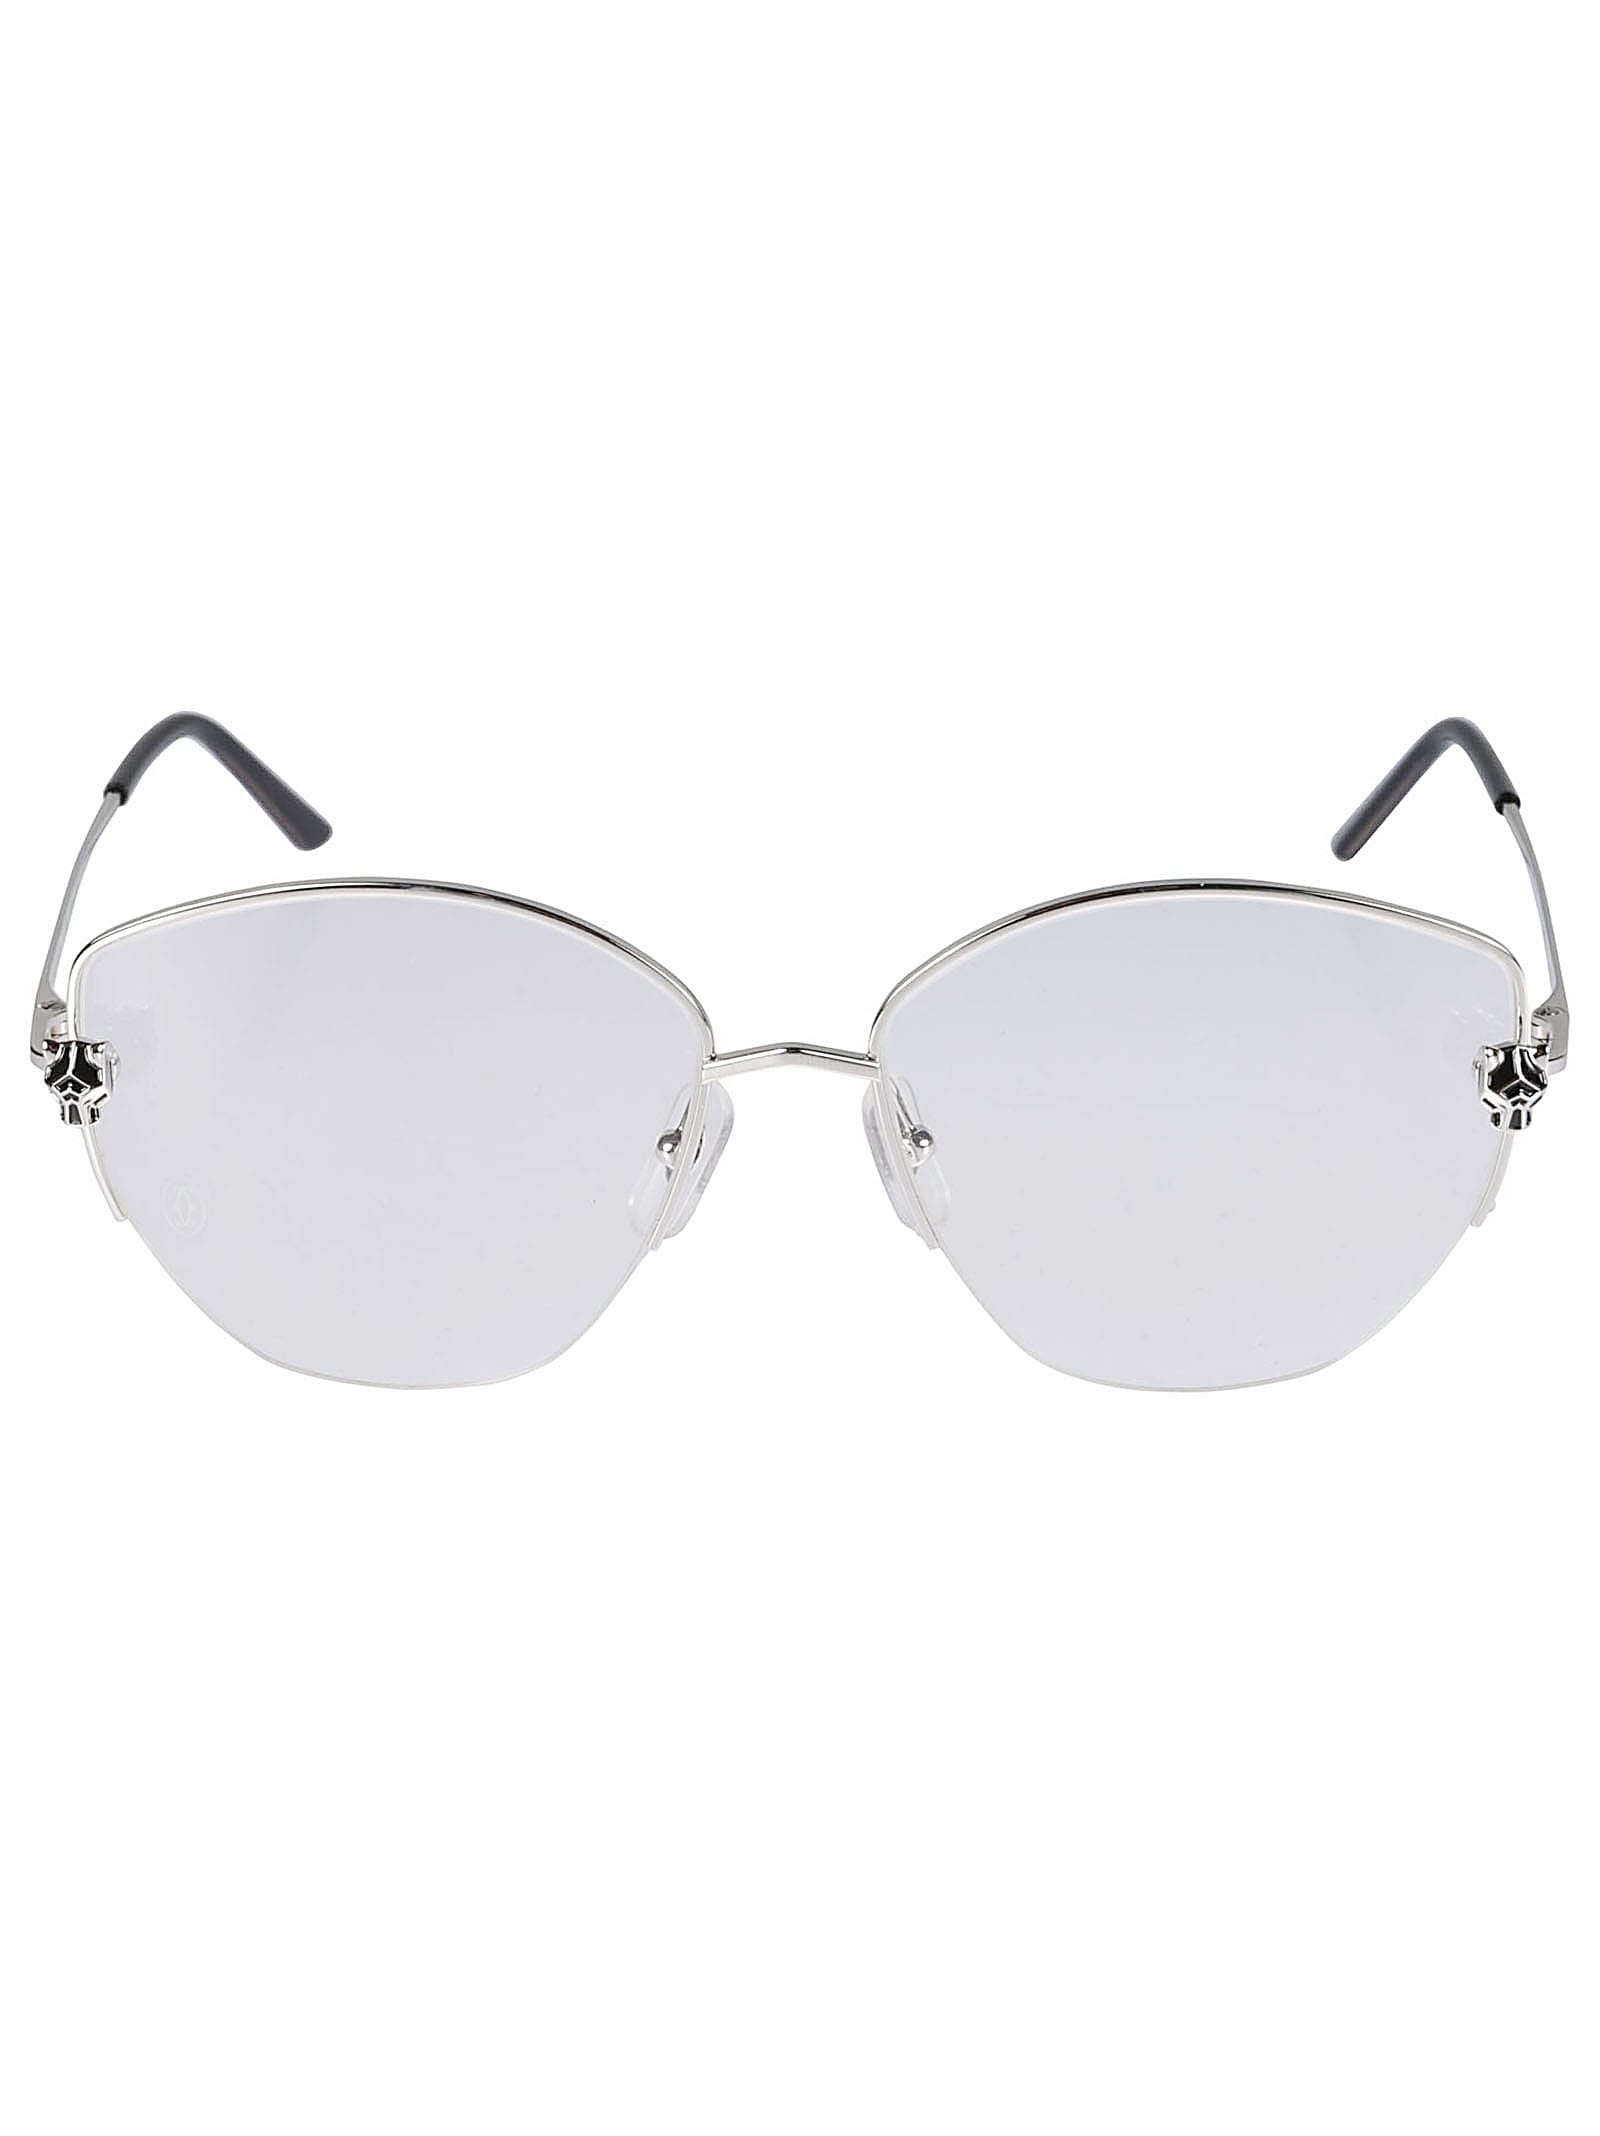 Cartier Classic Optical Glasses In Nero